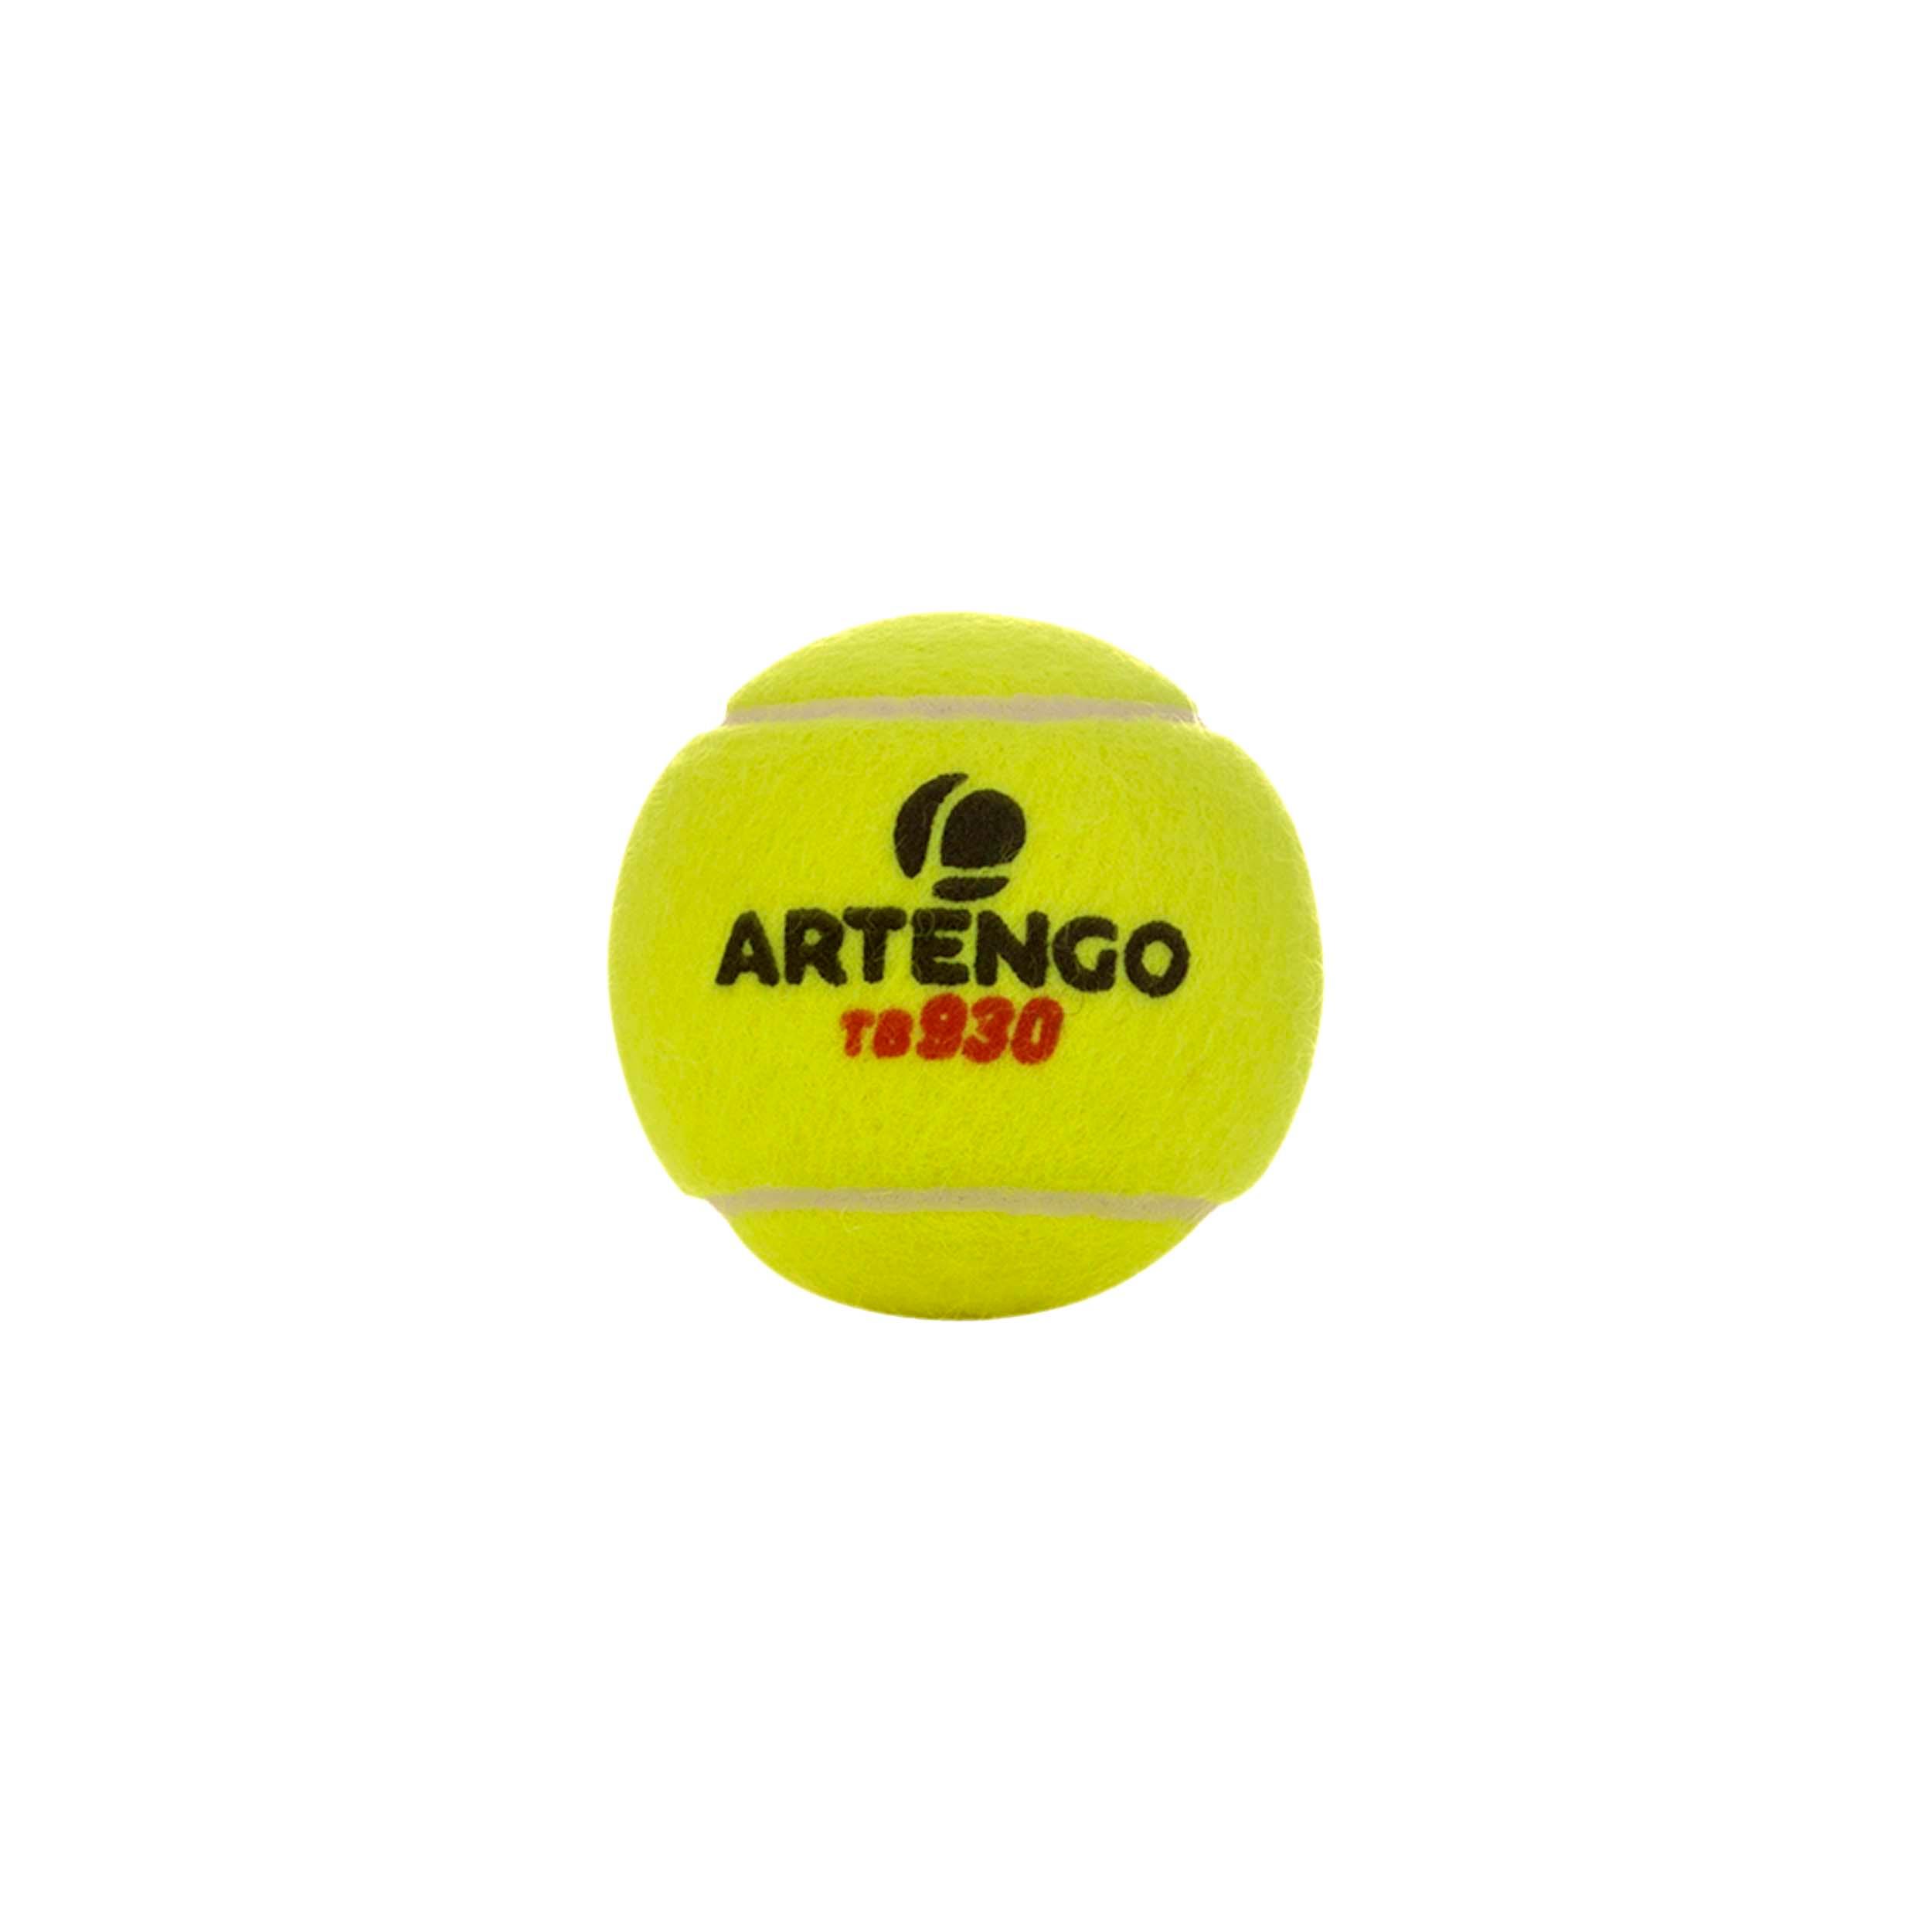 artengo 800 tennis balls